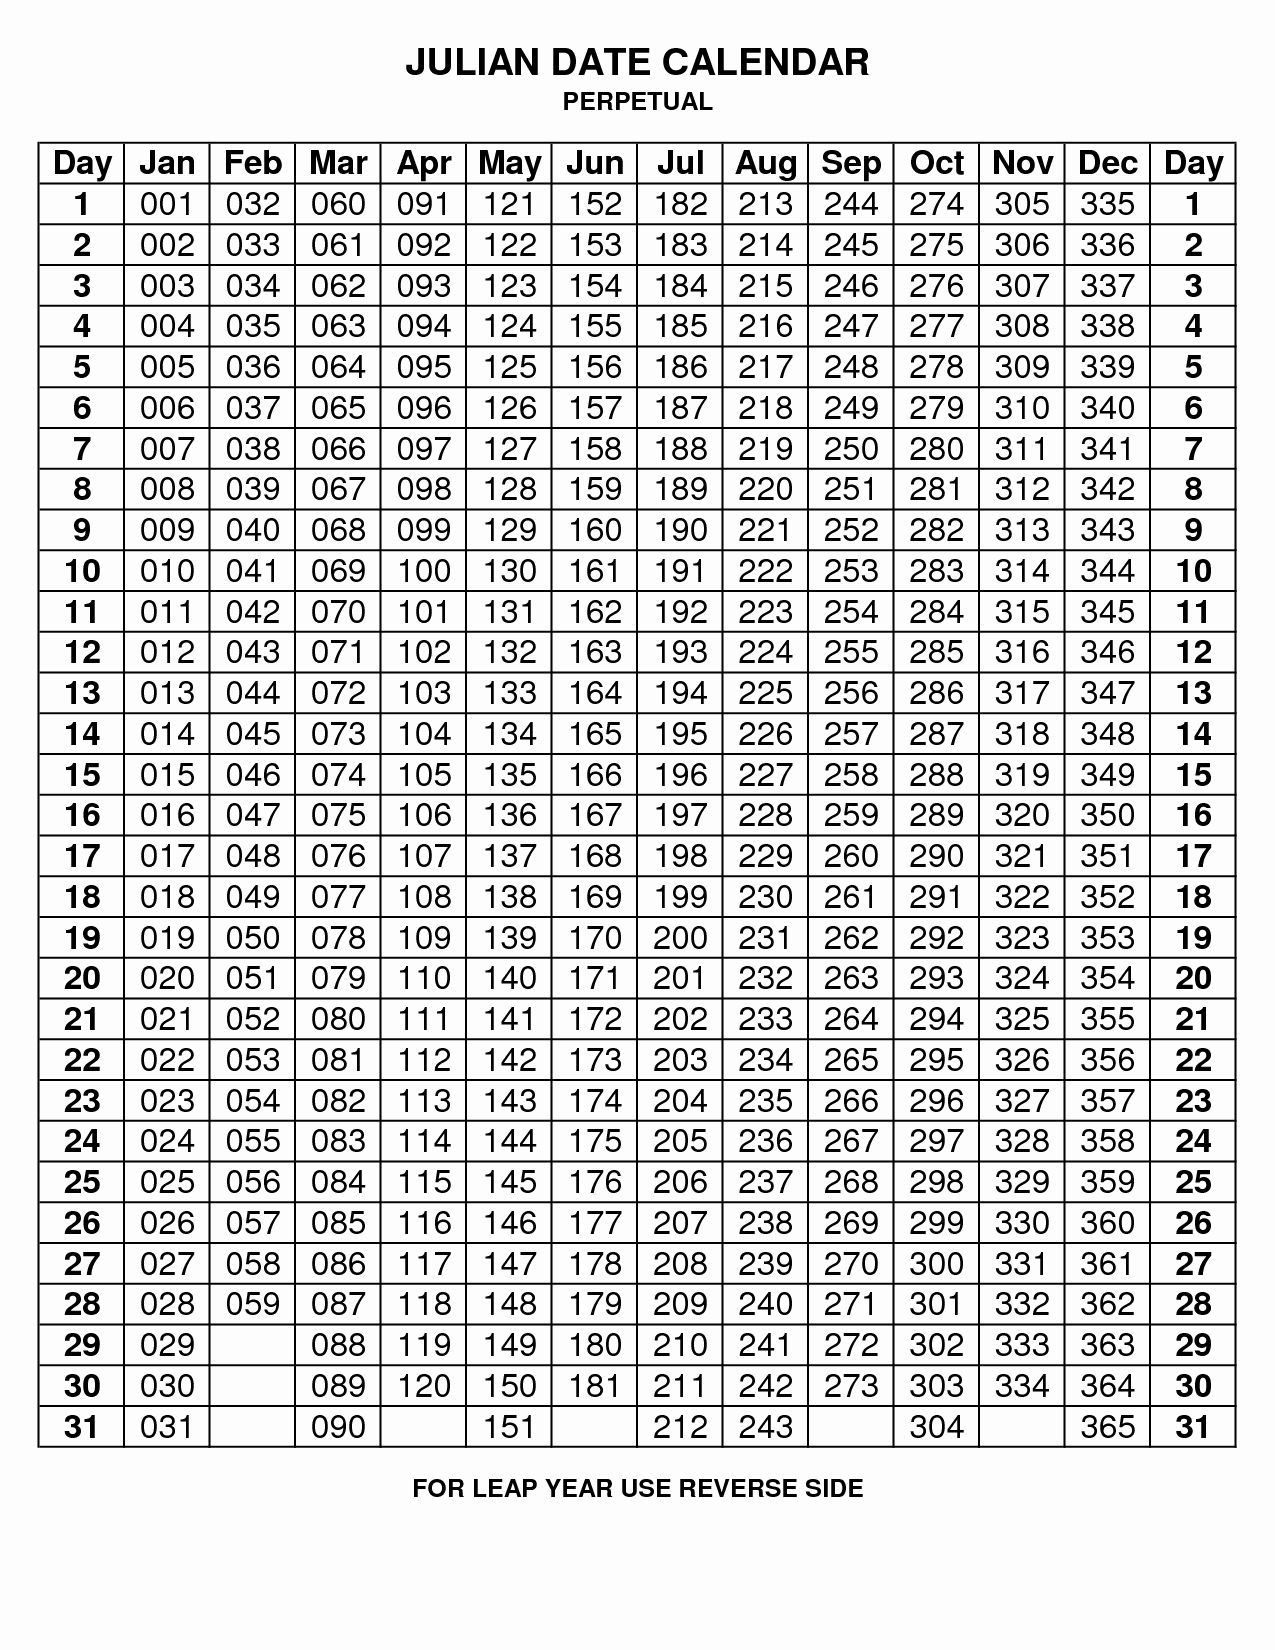 Depo Provera Perpetual Calendar To Print - Calendar  2021 Calendar Depo